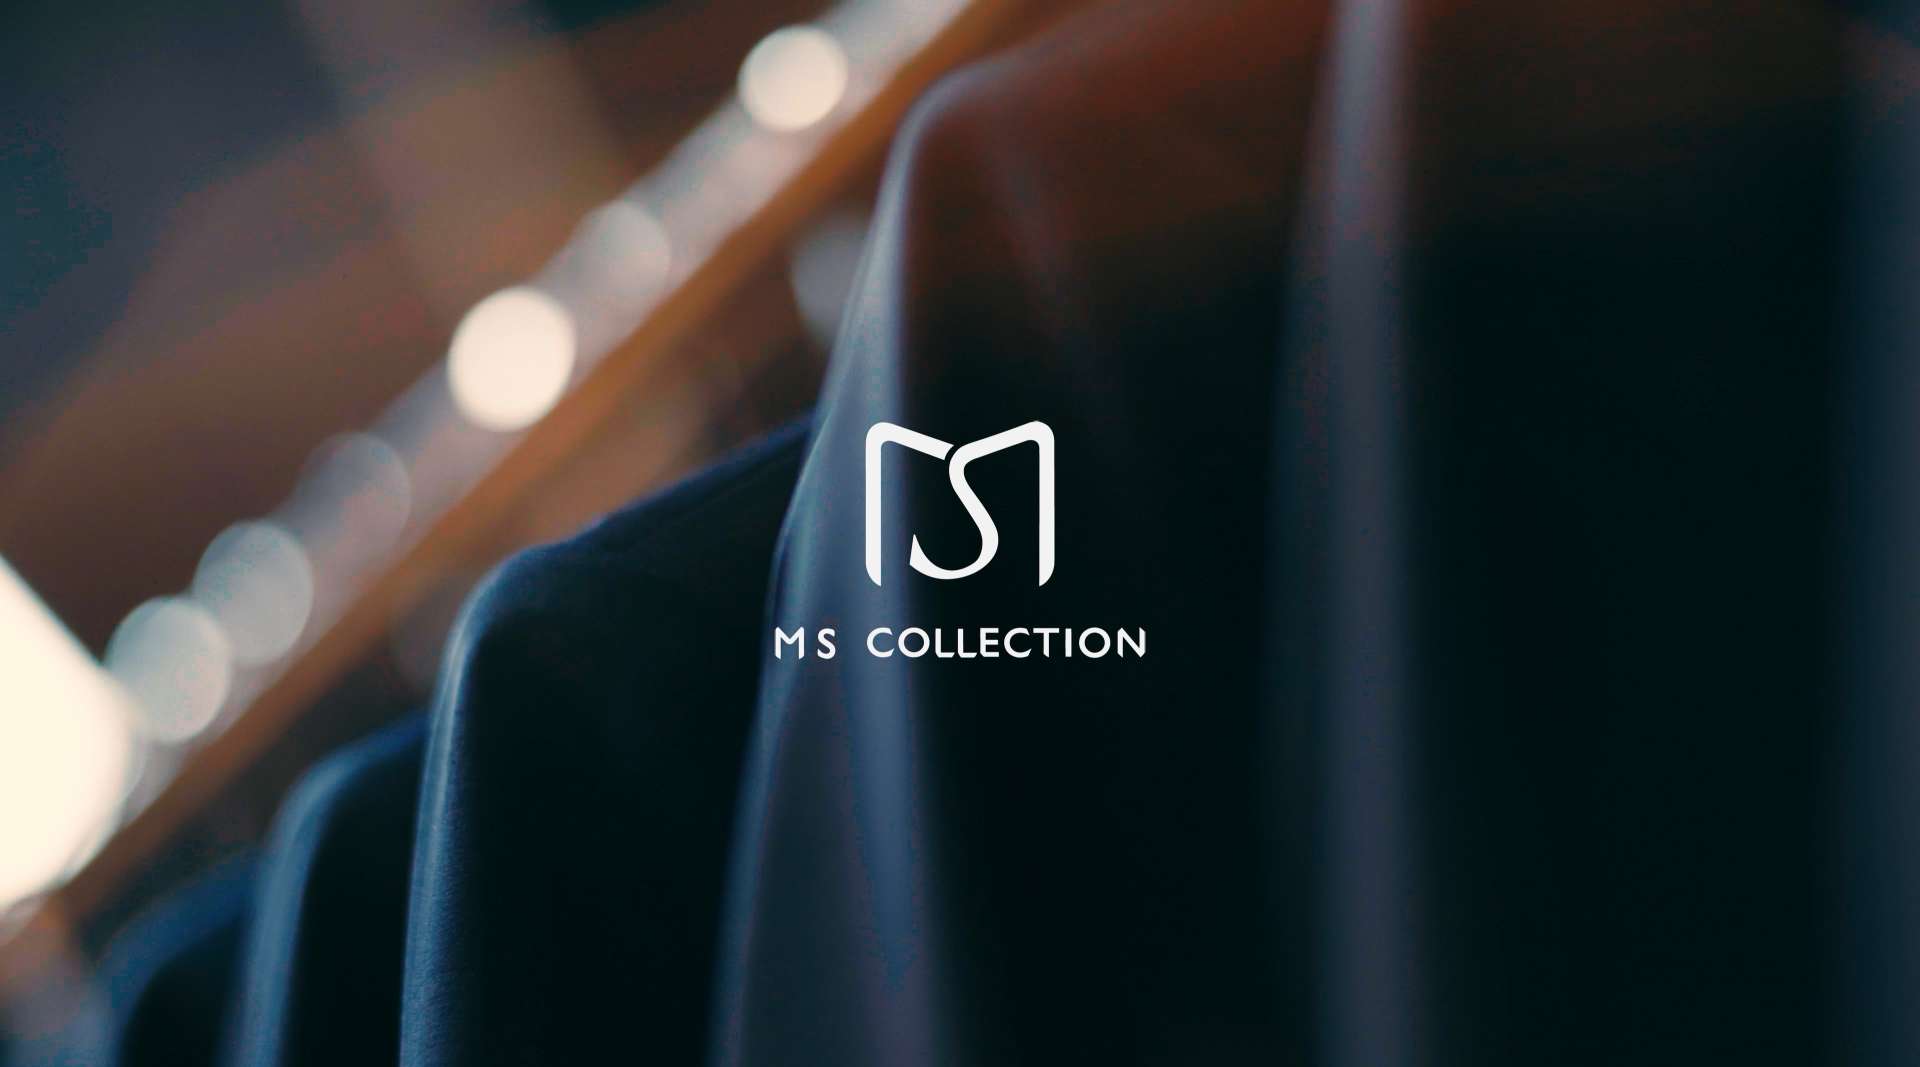 「MS COLLECTION」 服装品牌 设计篇